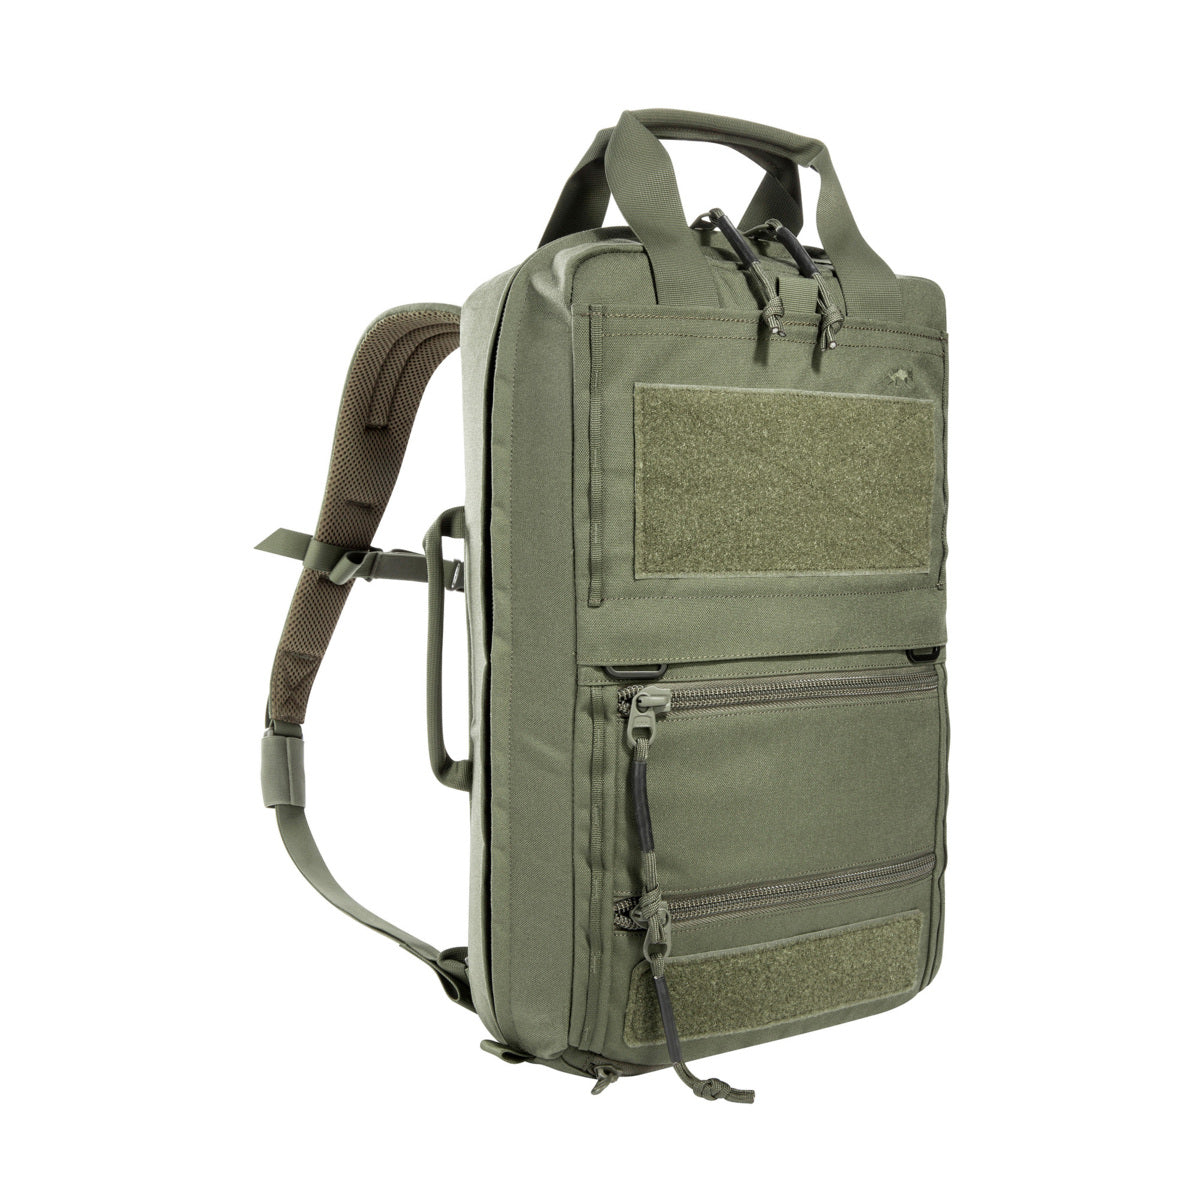 Tasmanian Tiger TT Survival Pack Backpack Bags, Packs and Cases Tasmanian Tiger Olive Tactical Gear Supplier Tactical Distributors Australia